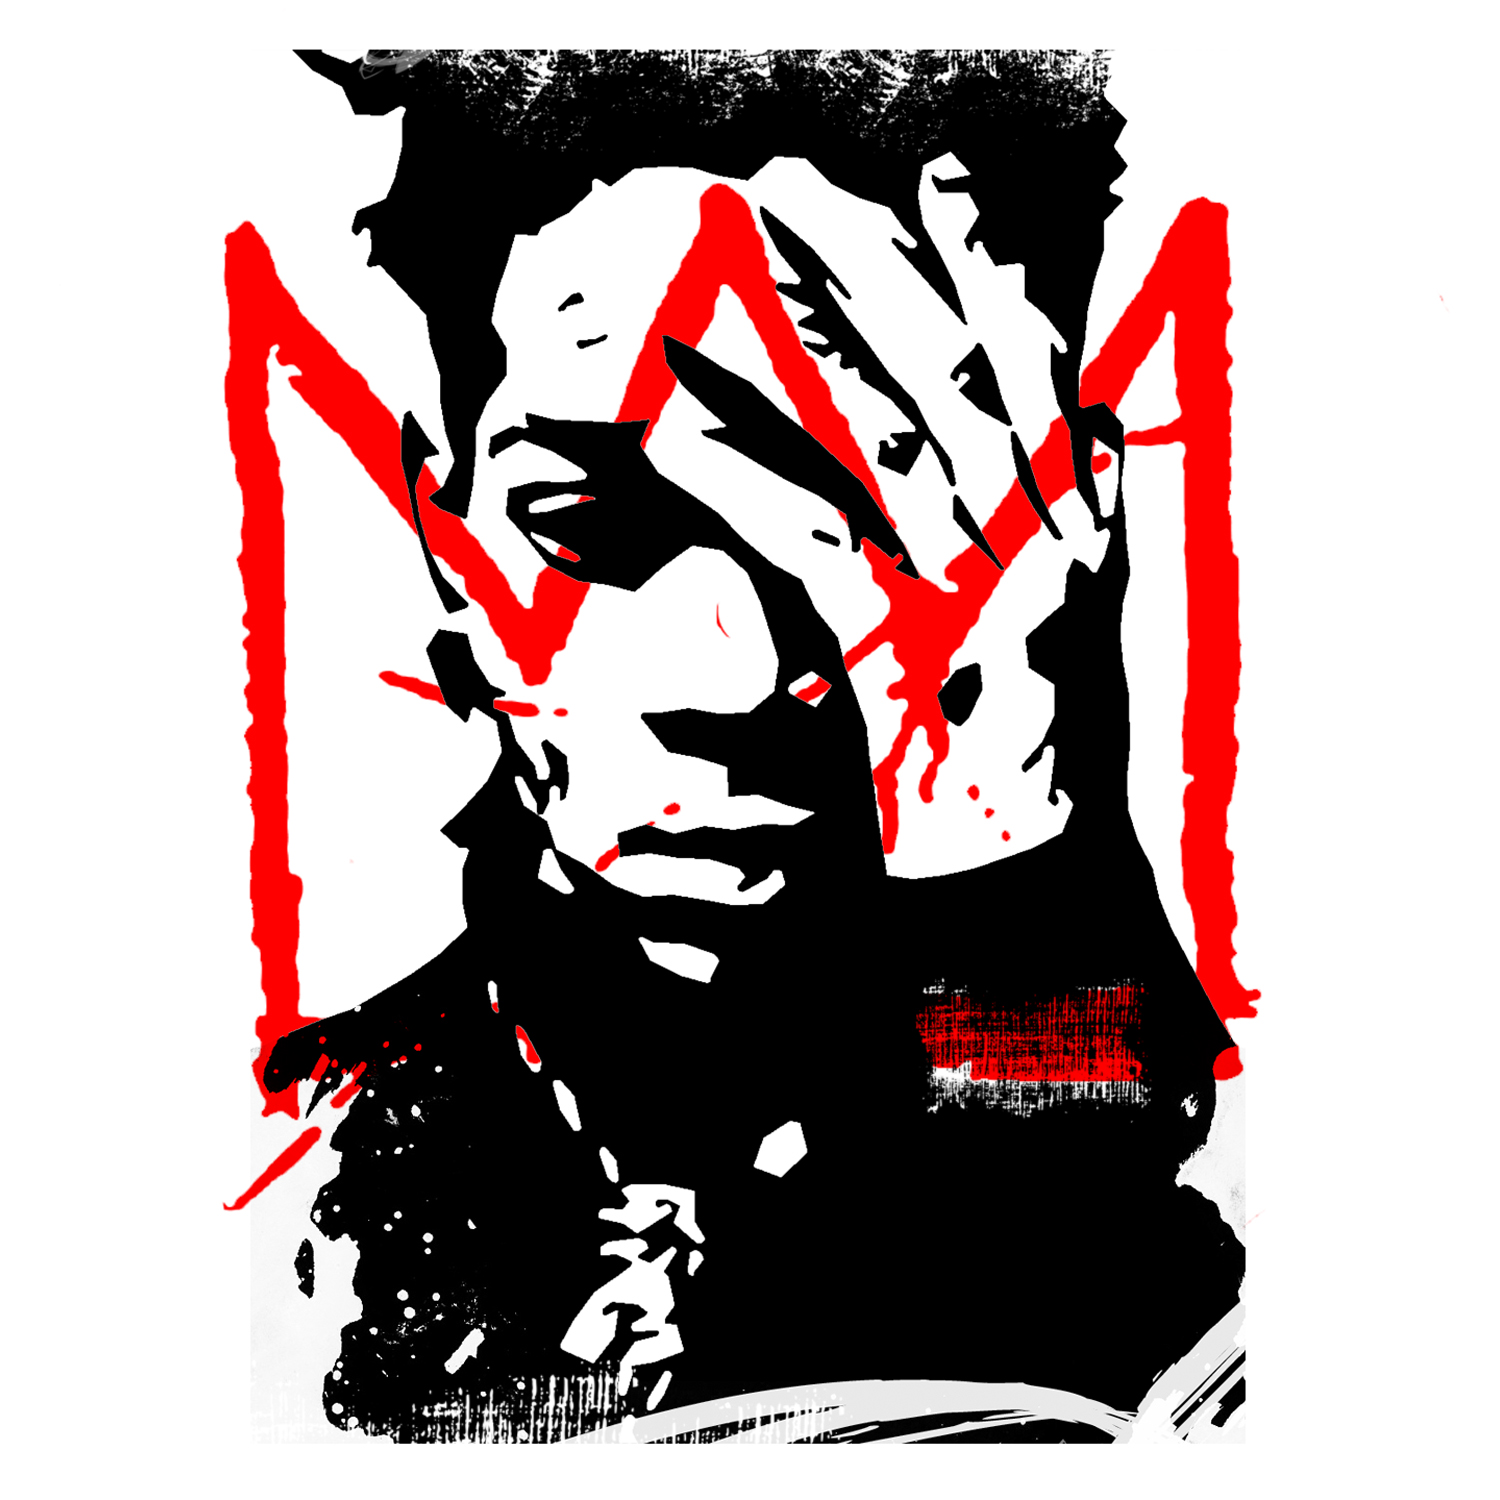 Jean-Michel Basquiat's Crown